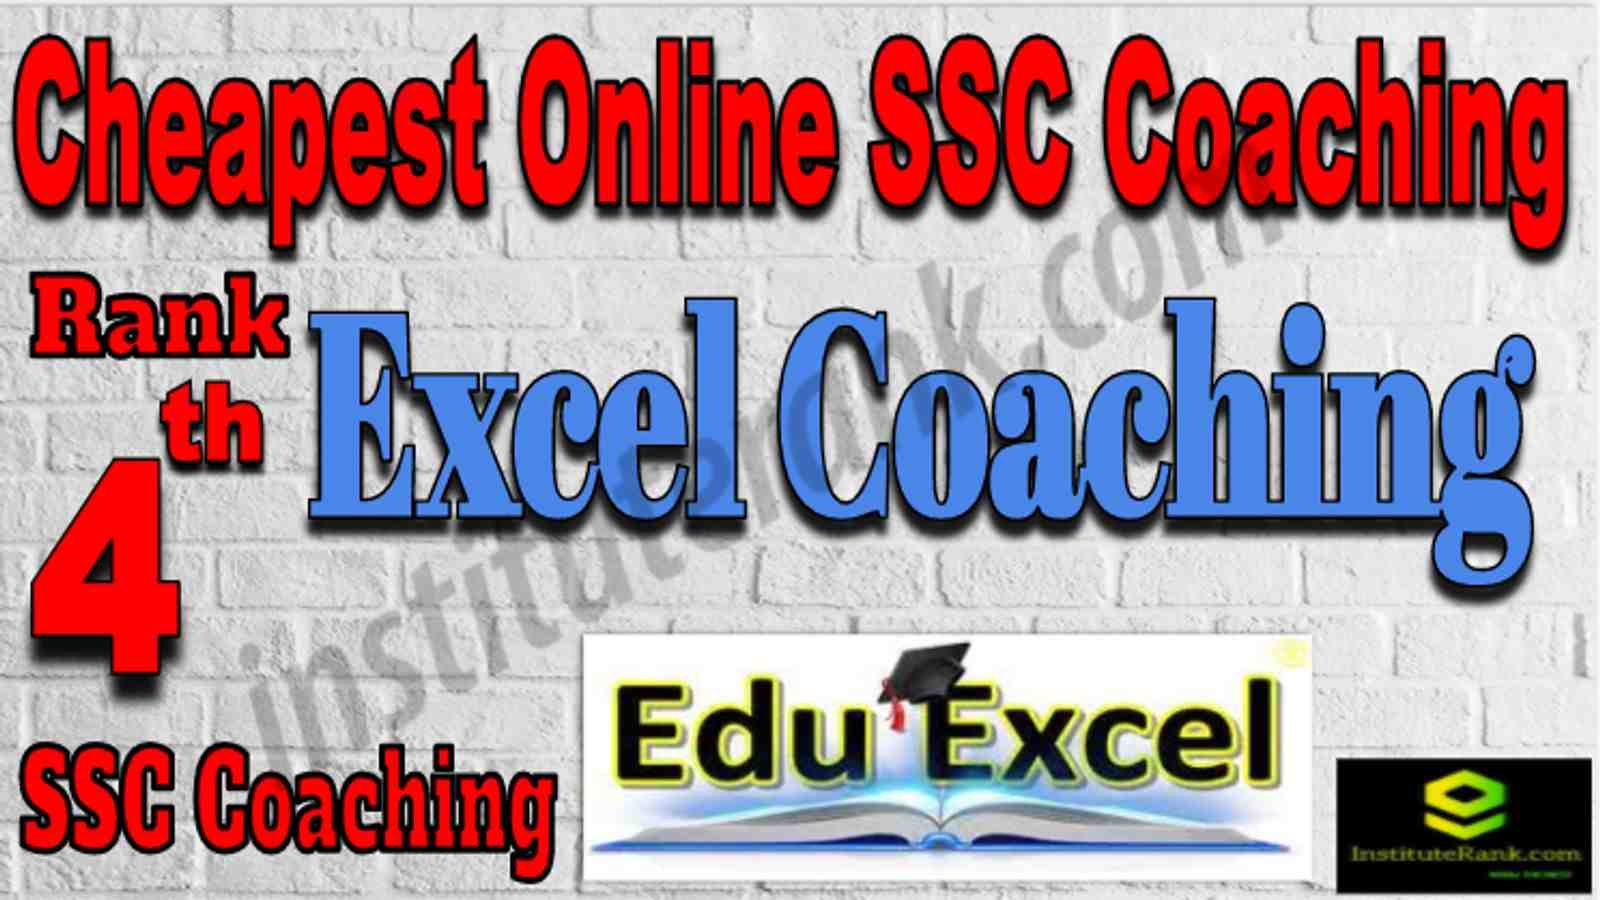 Rank 4 Cheapest Online SSC Coaching